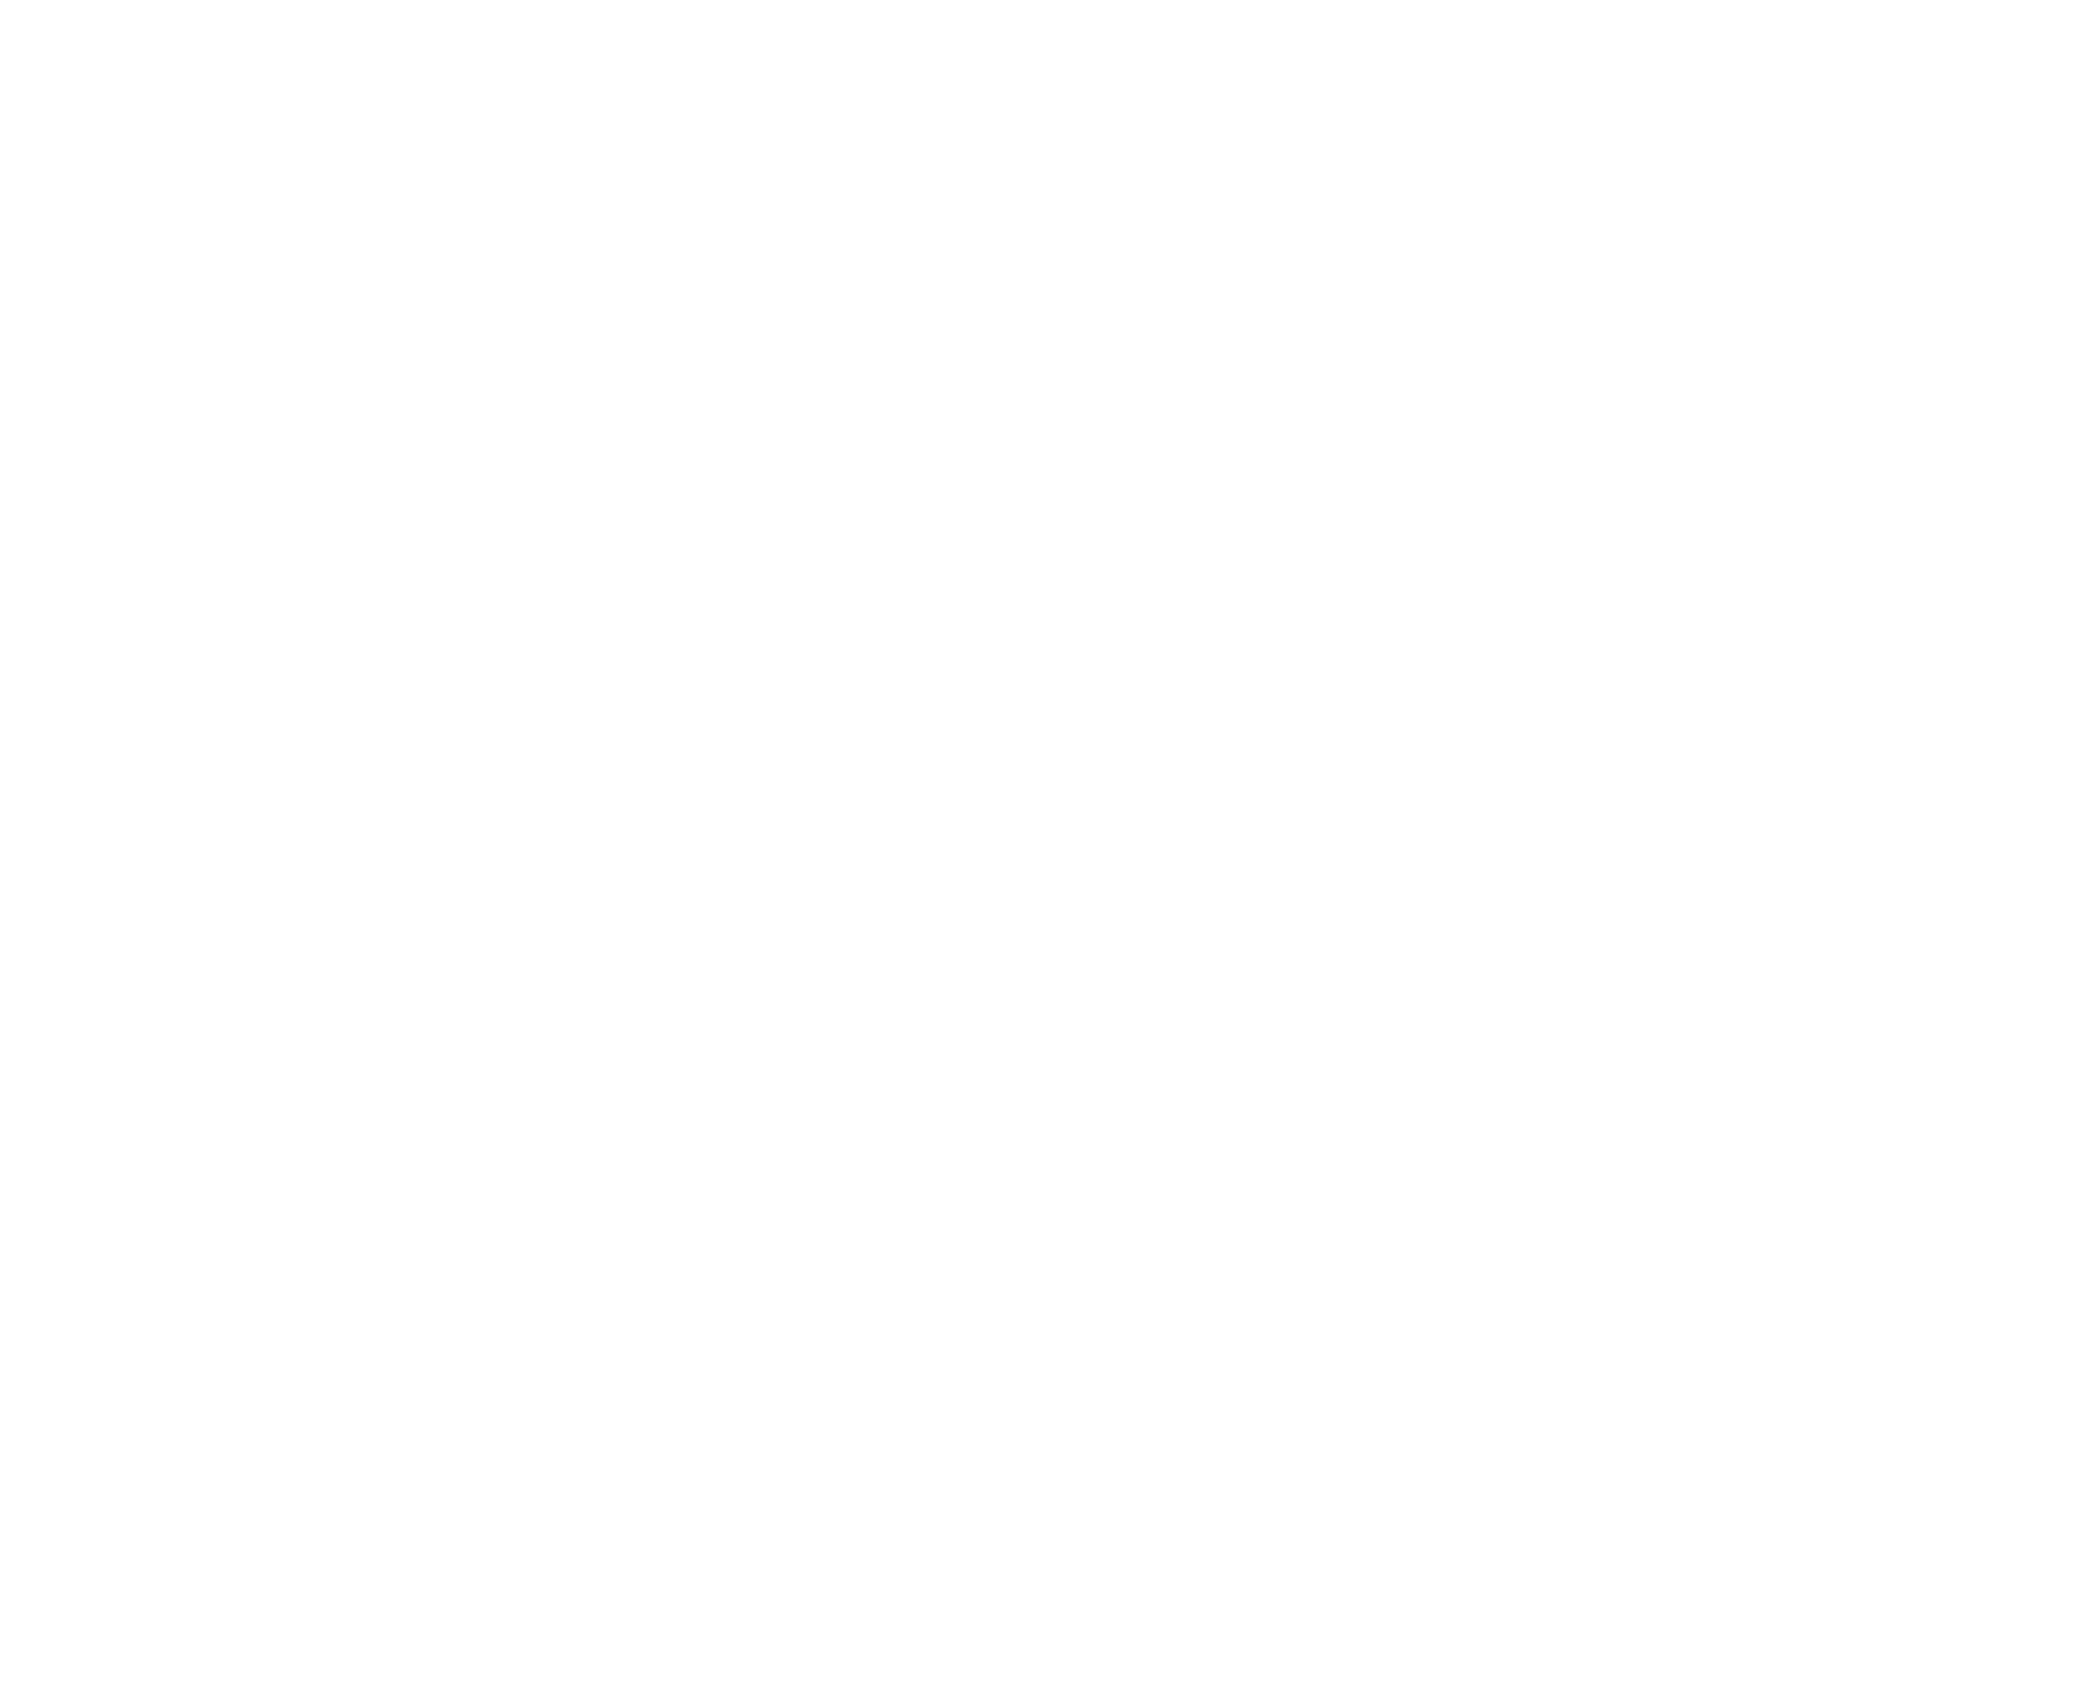 LOGO HUGO CALDERANO – BRANCA